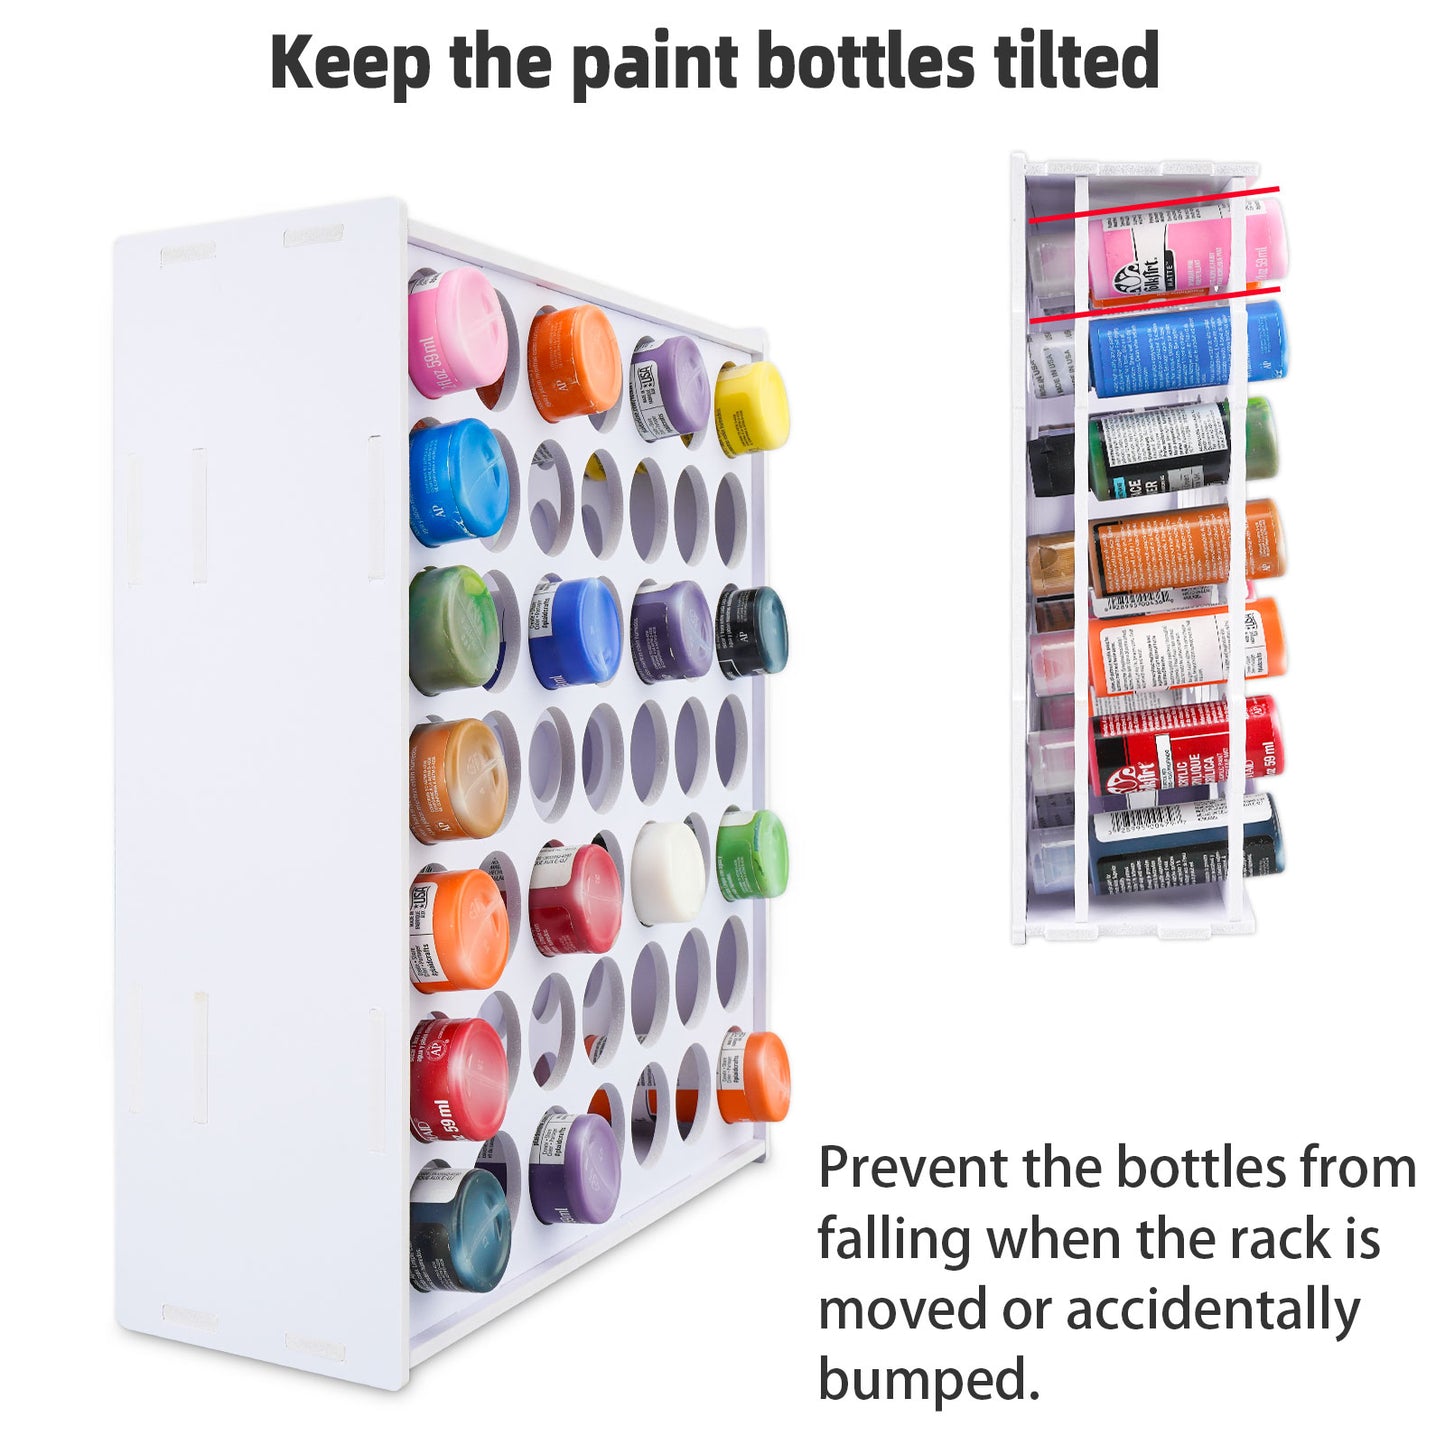 49 Holes Paint Rack for 2oz Acrylic Bottles